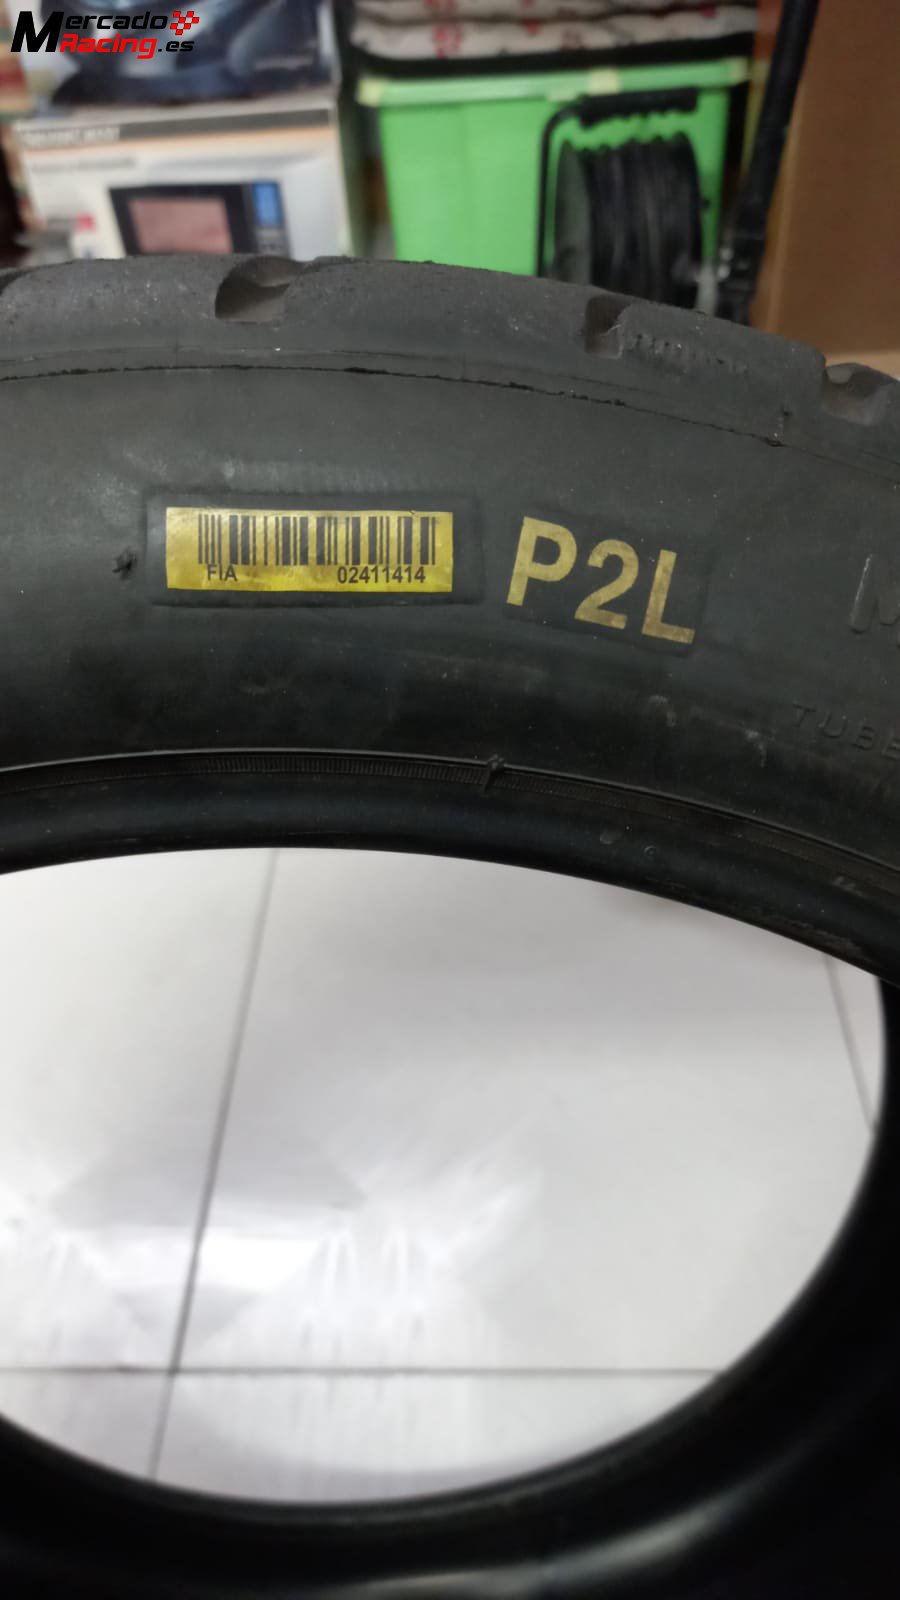 Neumáticos slick p2l michelin-27/65/18